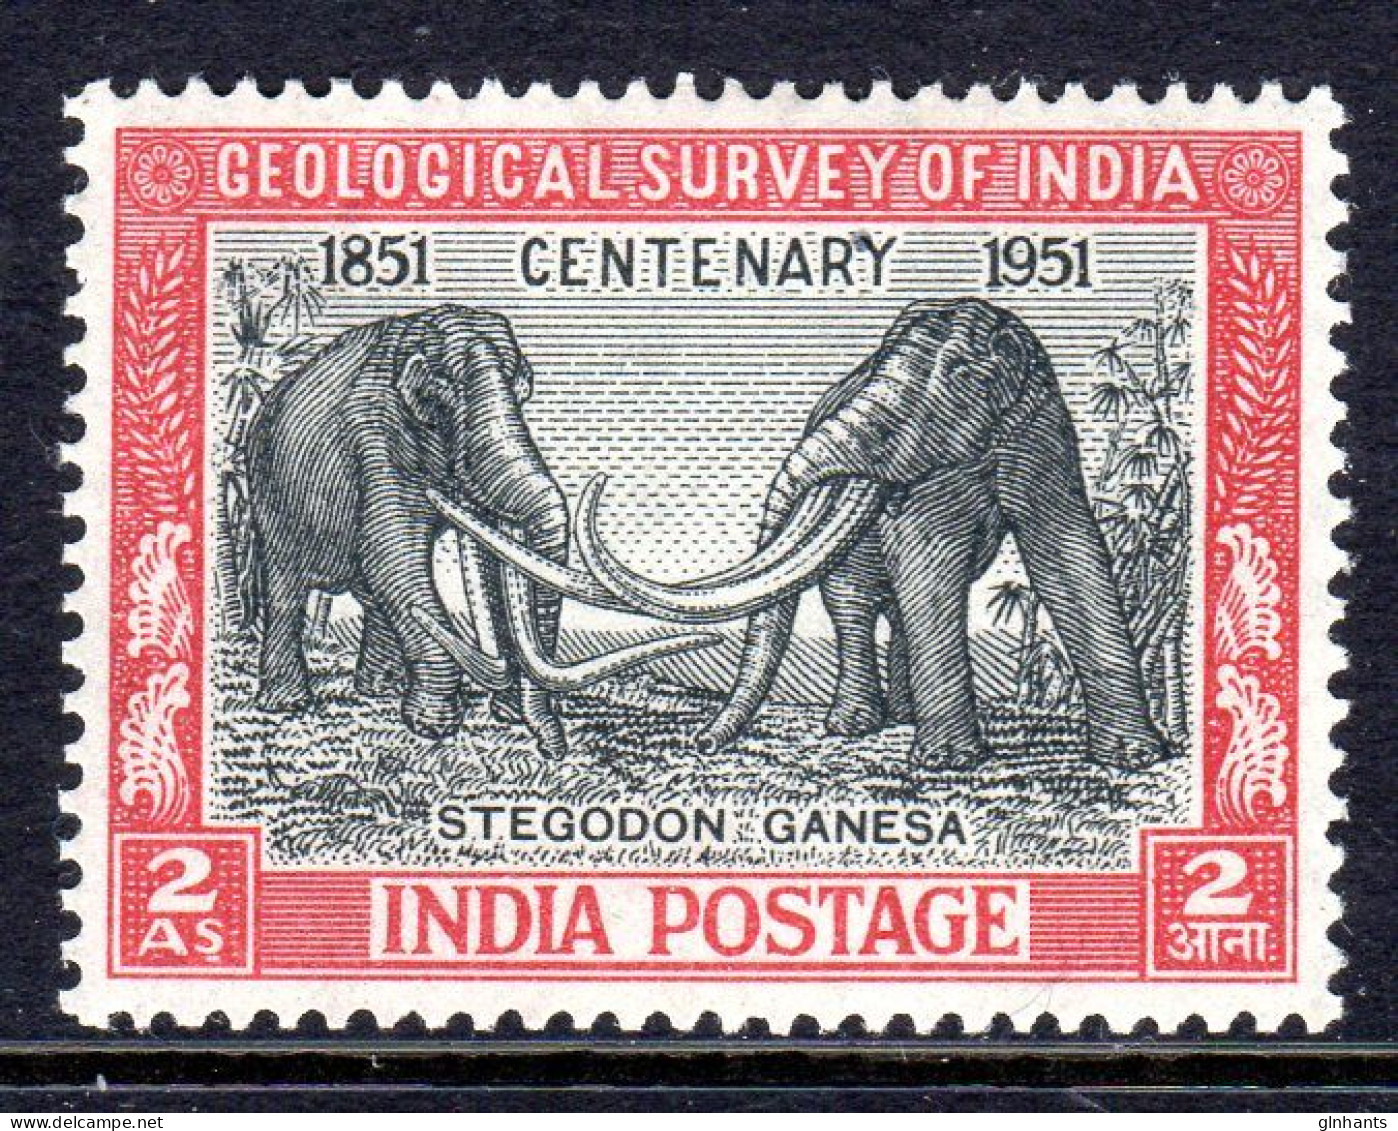 INDIA - 1951 GEOLOGICAL SURVEY ANNIVERSARY STEGODON STAMP FINE MOUNTED MINT MM * SG 334 - Unused Stamps